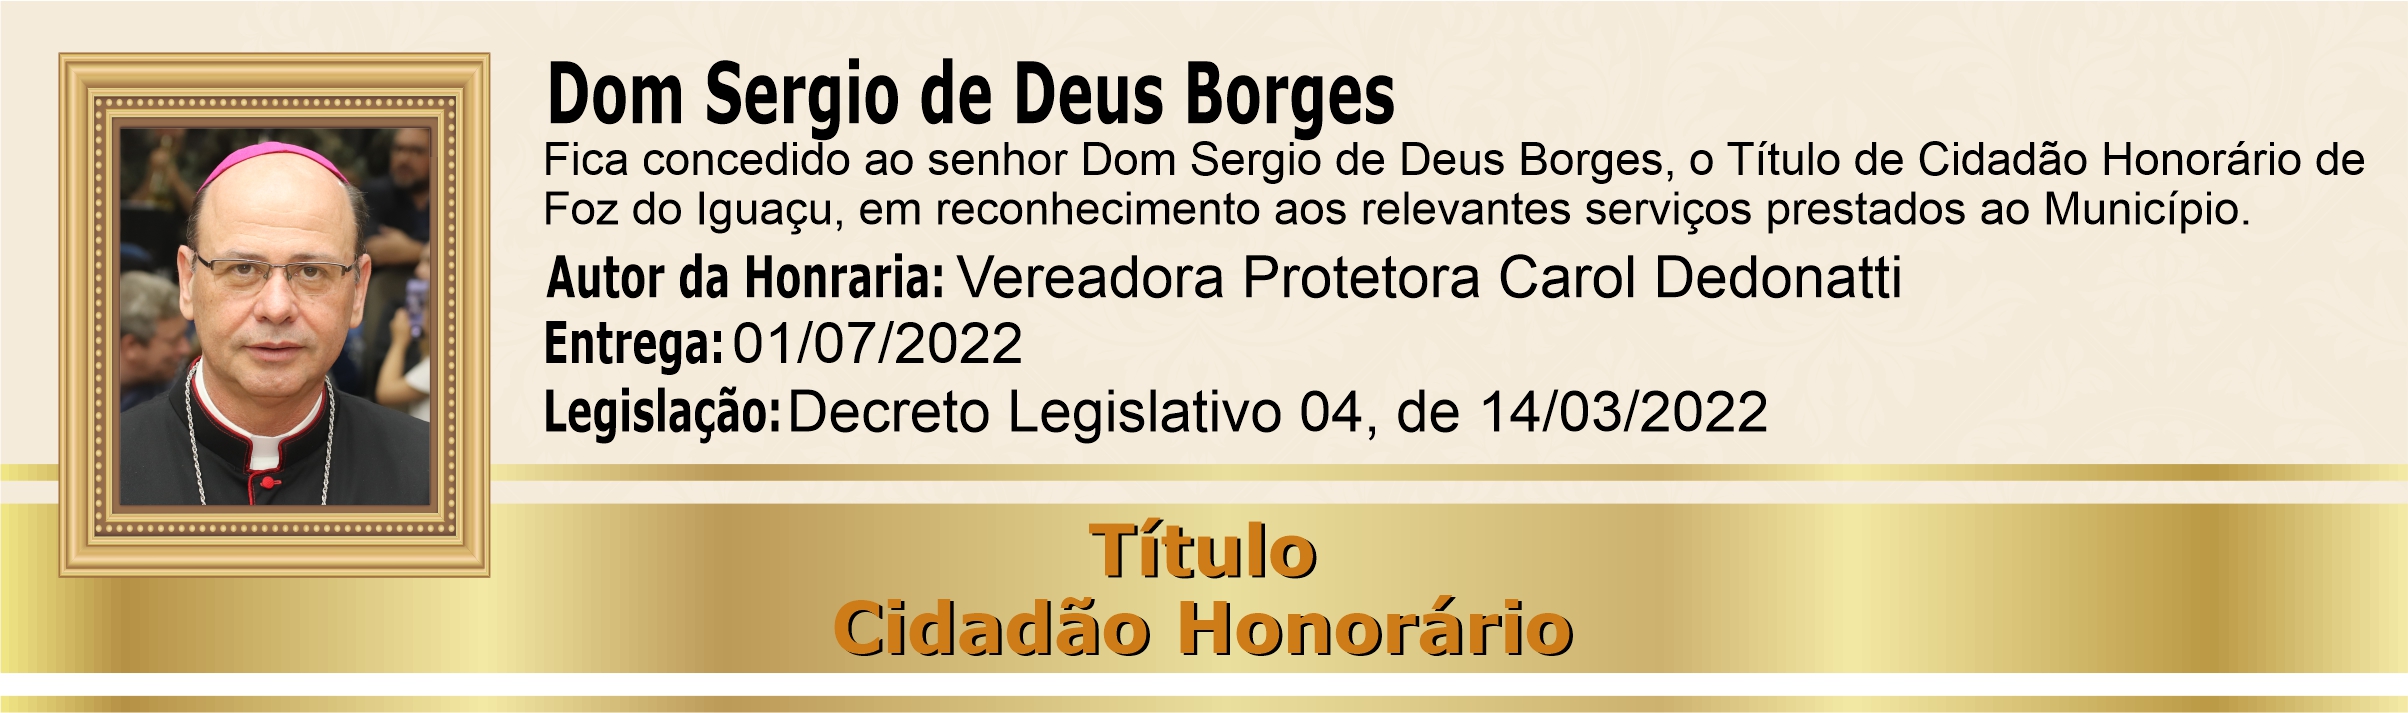 Dom Sergio de Deus Borges